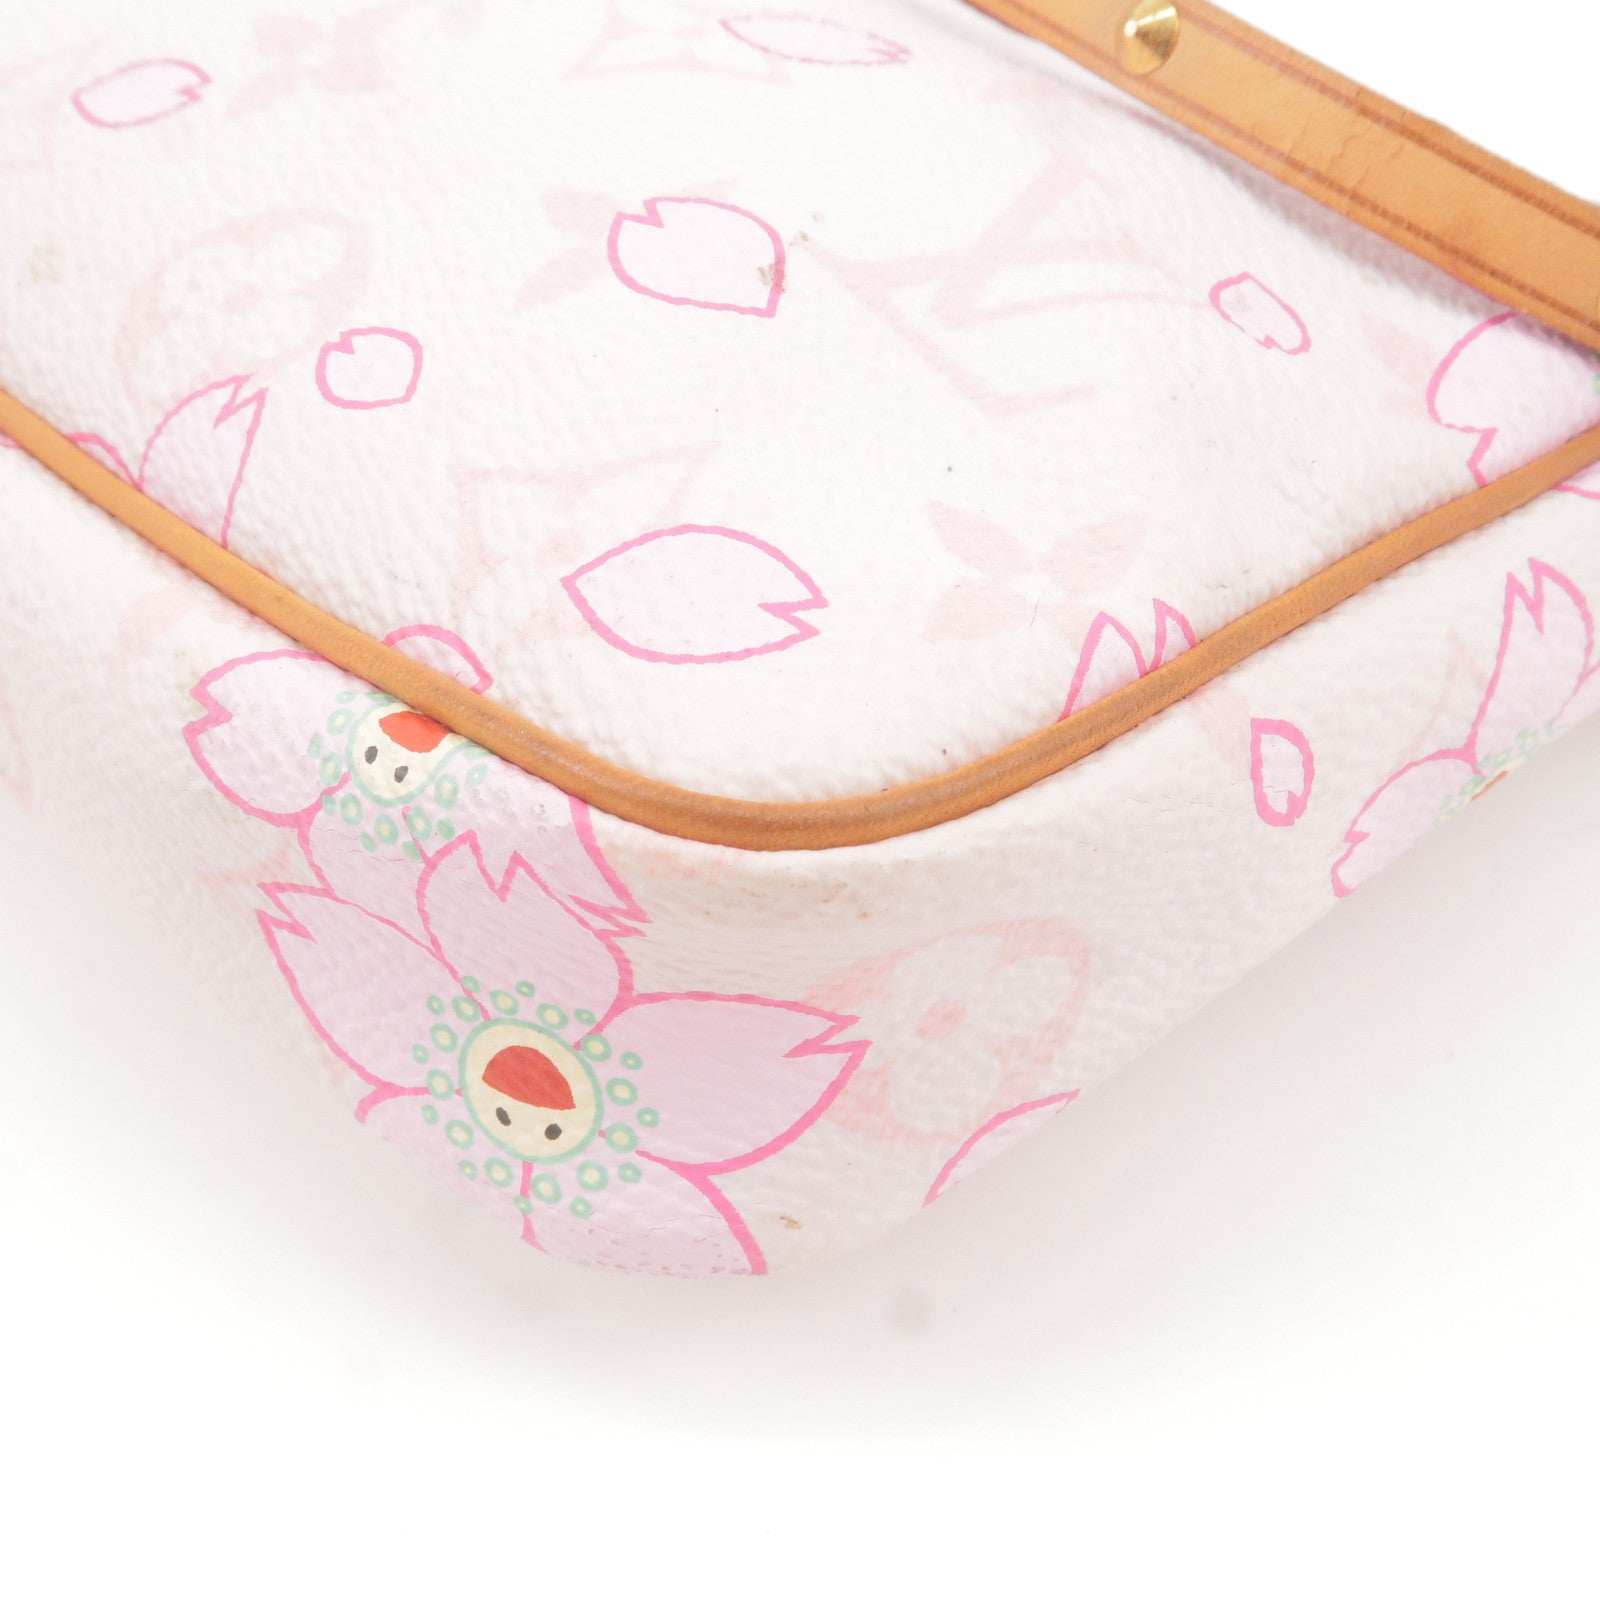 Pochette accessories cherry blossom louis vuitton - Etiqueta de Luxo